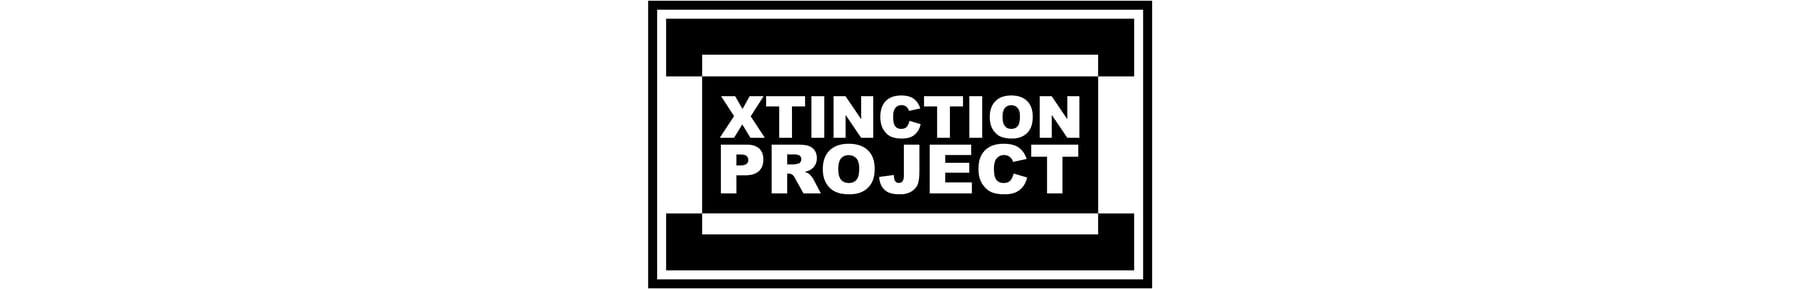 Xtinction Project